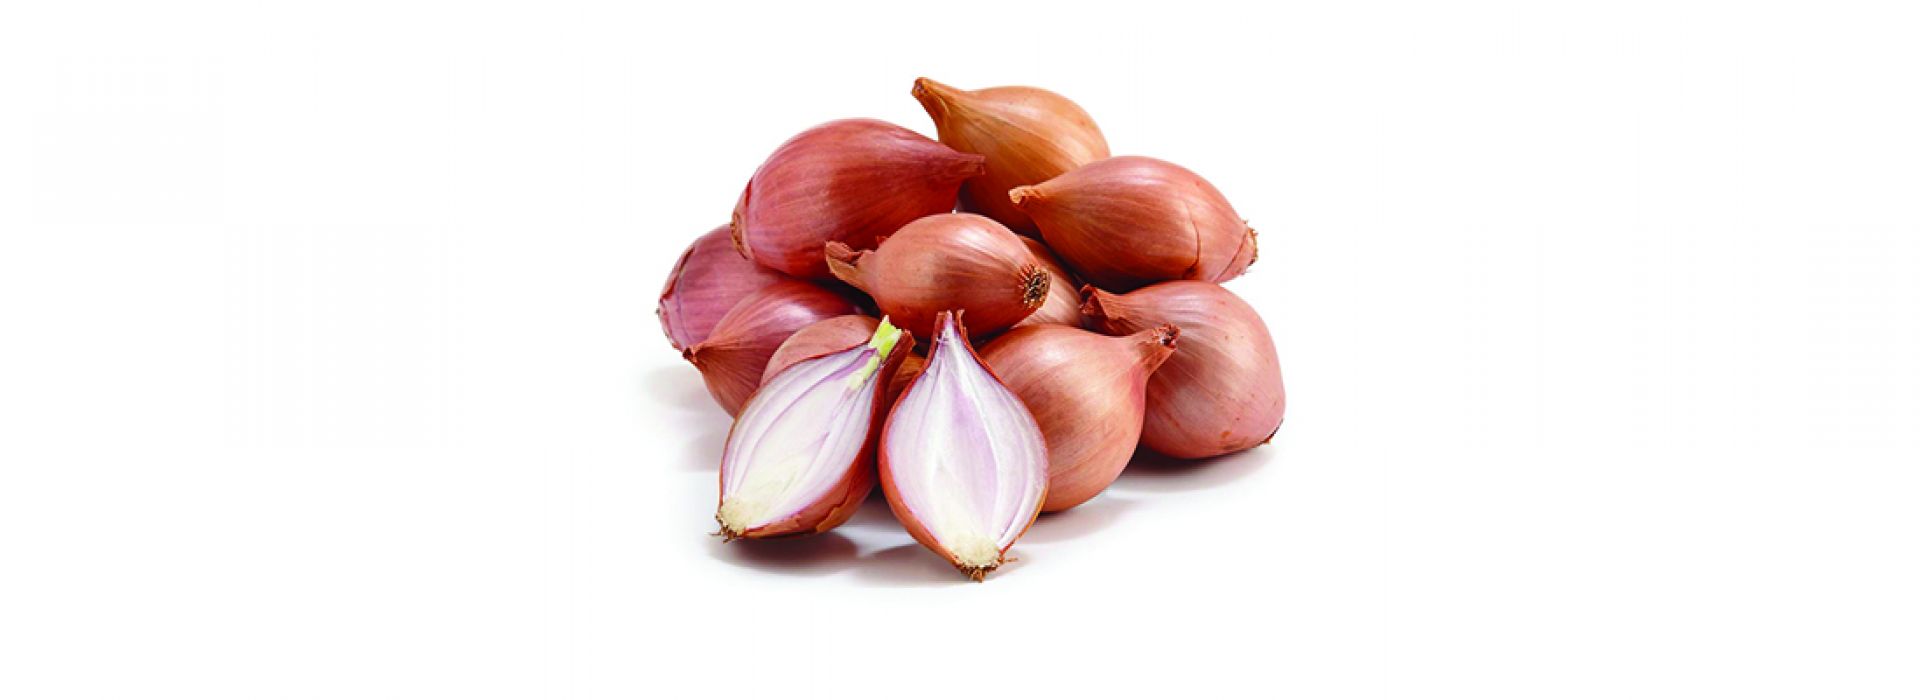 Onion Shallots